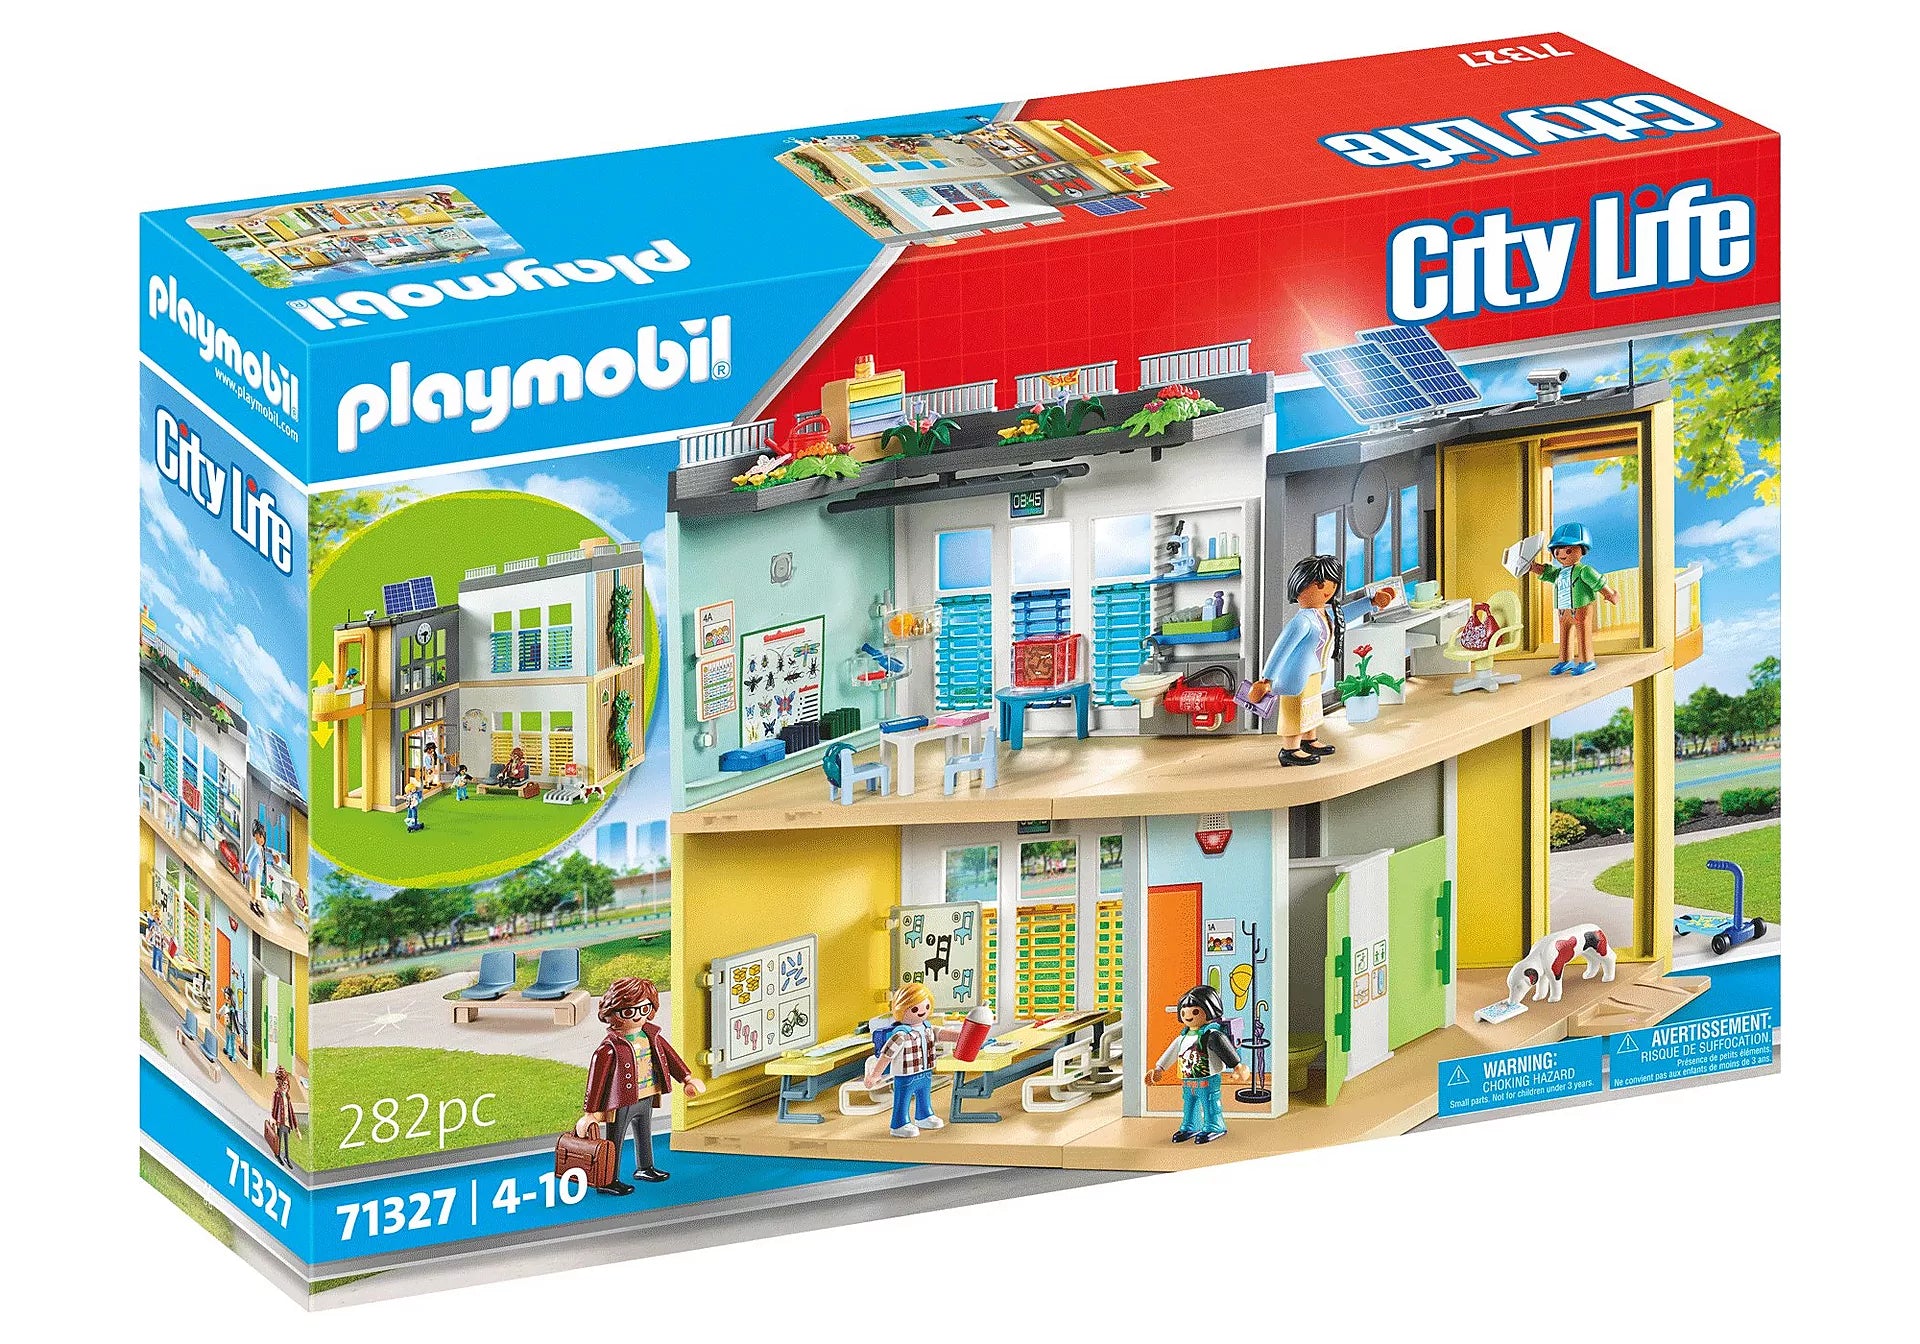 Playmobil City Life 71327 Large School 282pc Playset